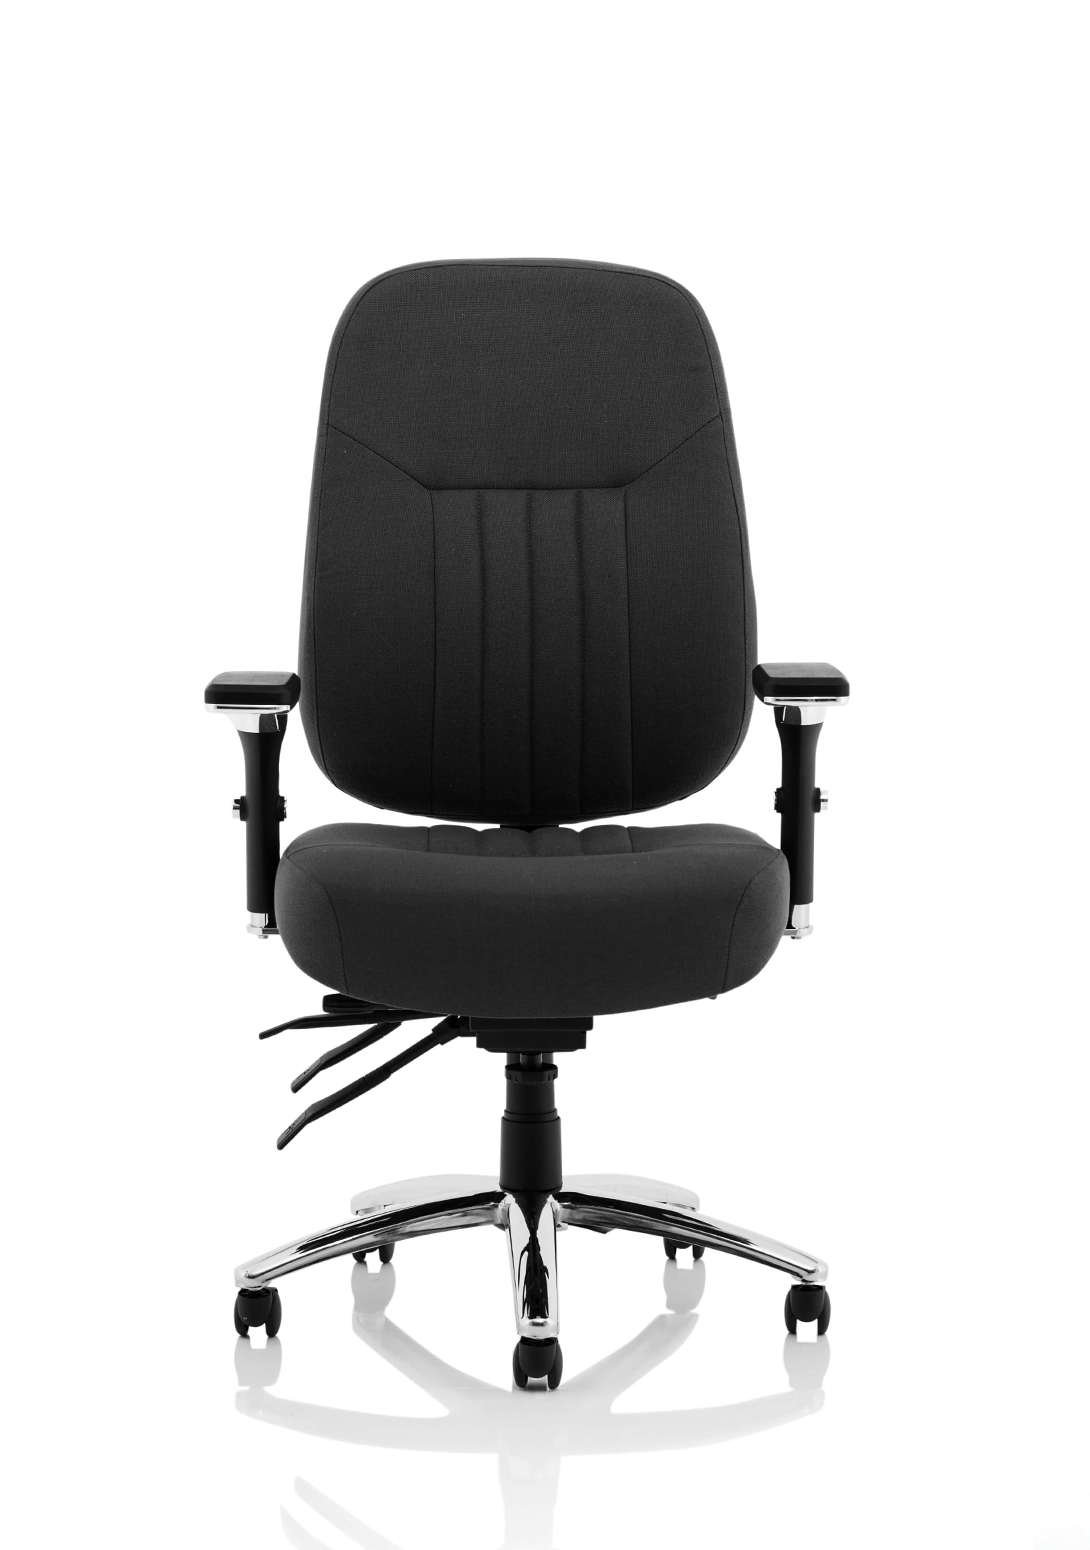 Barcelona Deluxe Home Office Chair | Ergonomic Office Chair | Home Office Furniture